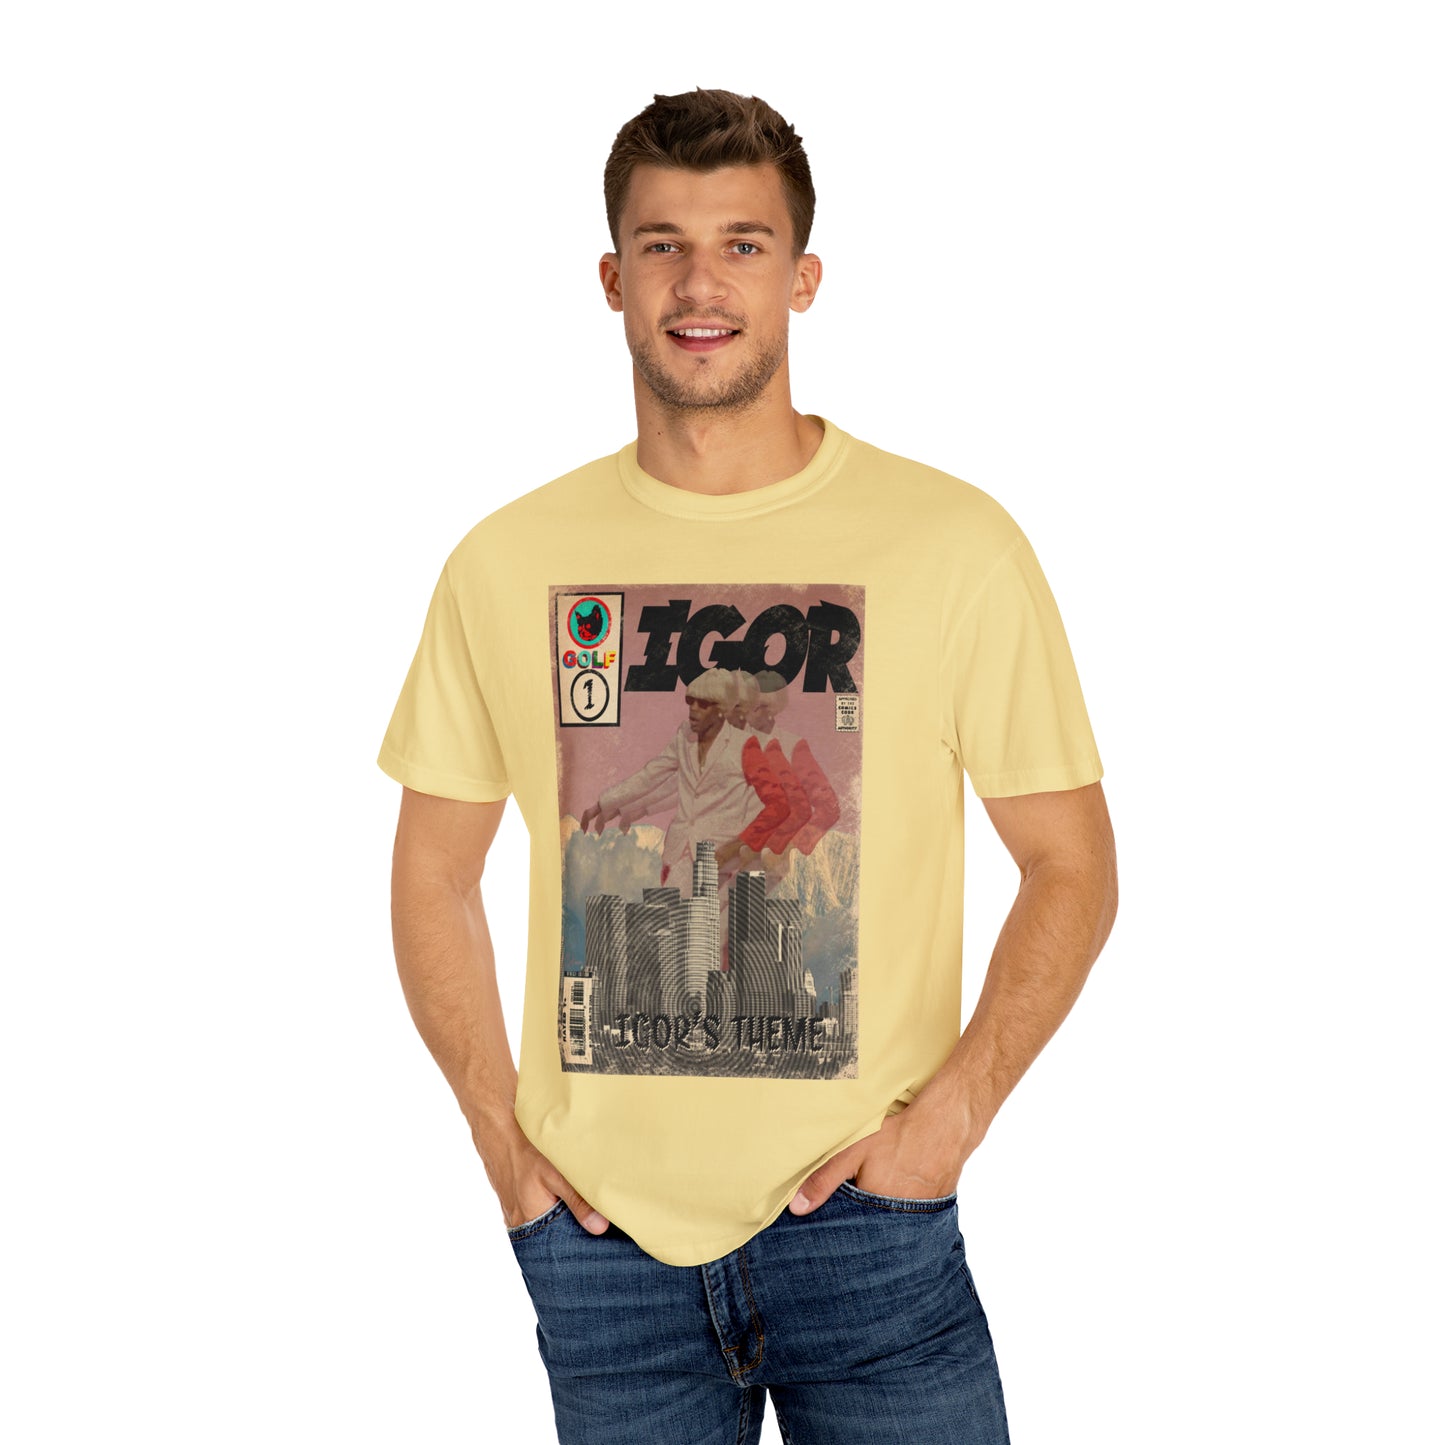 Tyler The Creator - IGOR - Unisex Comfort Colors T-shirt